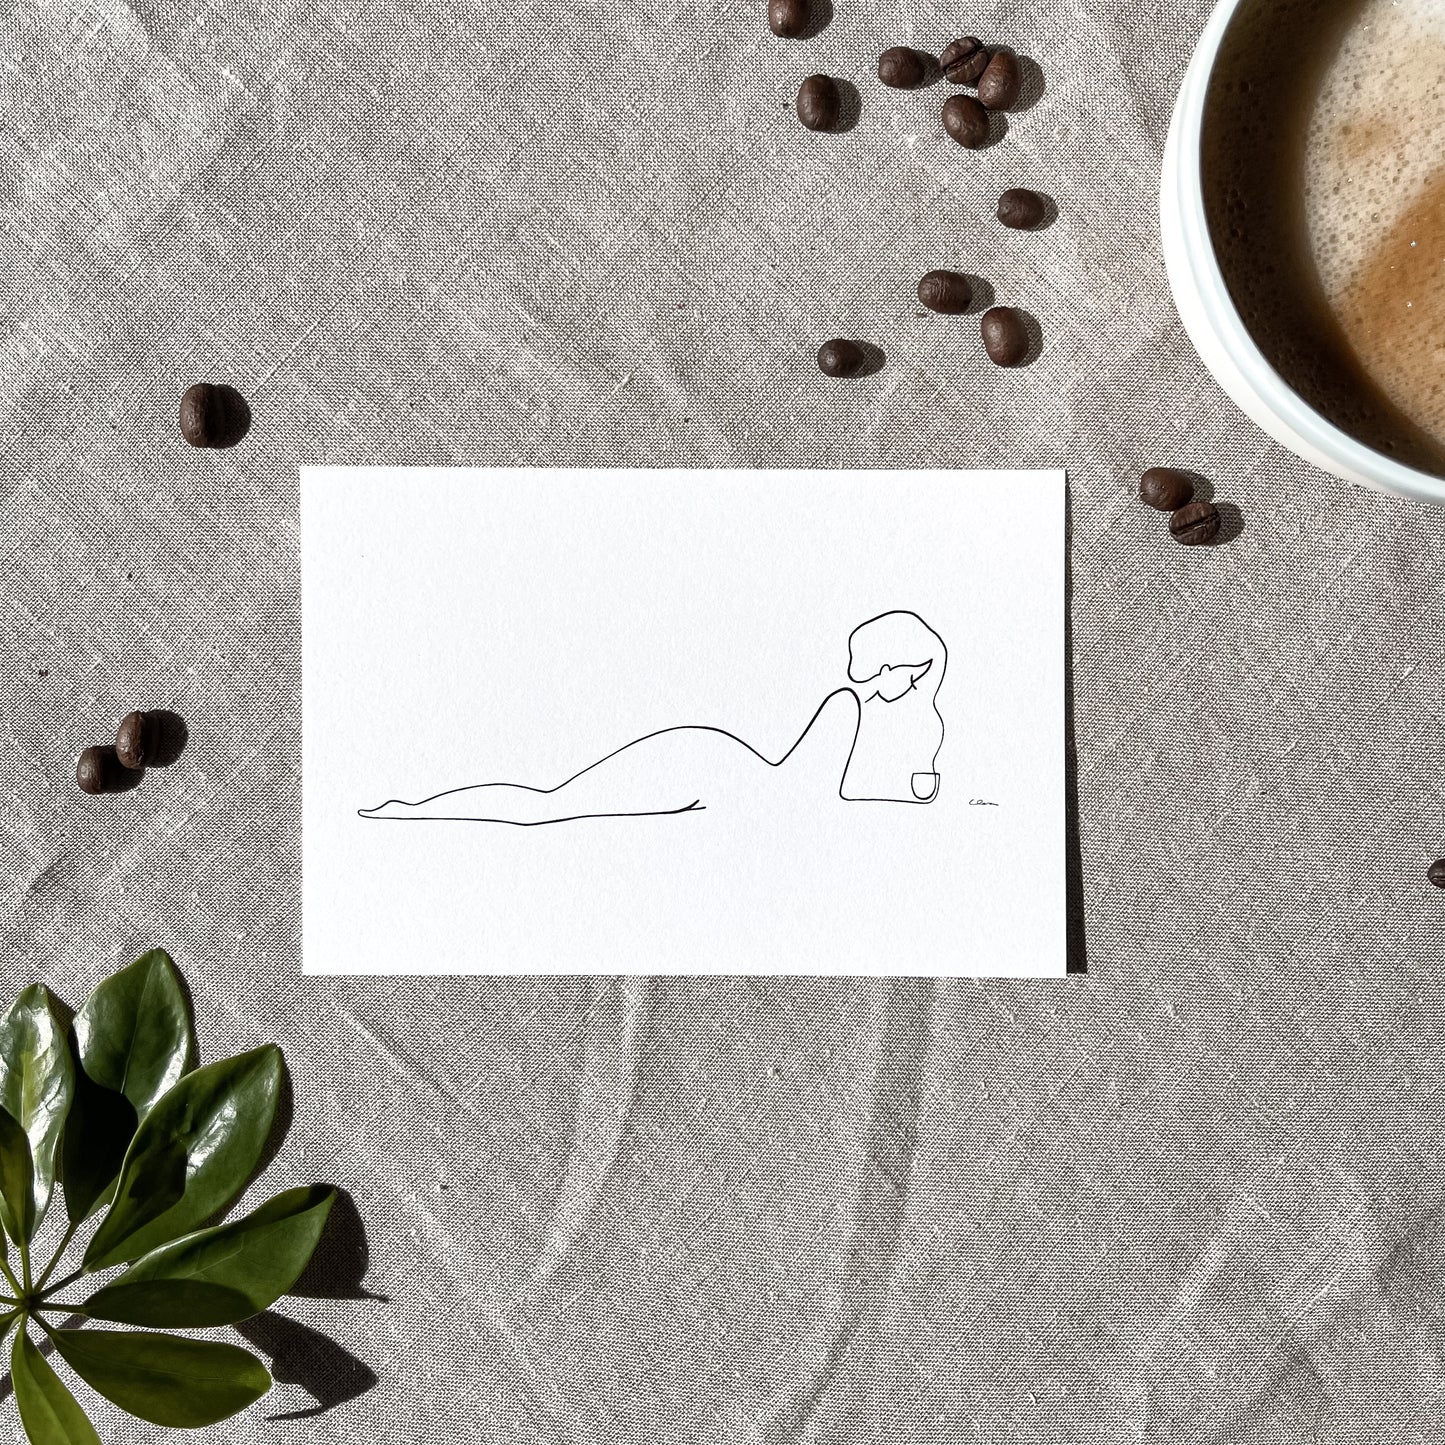 Kaffee oder Tee? Nr. 1-JUDITH CLARA-15x10 cm (zartweiß) Papier 300g-one-line-art